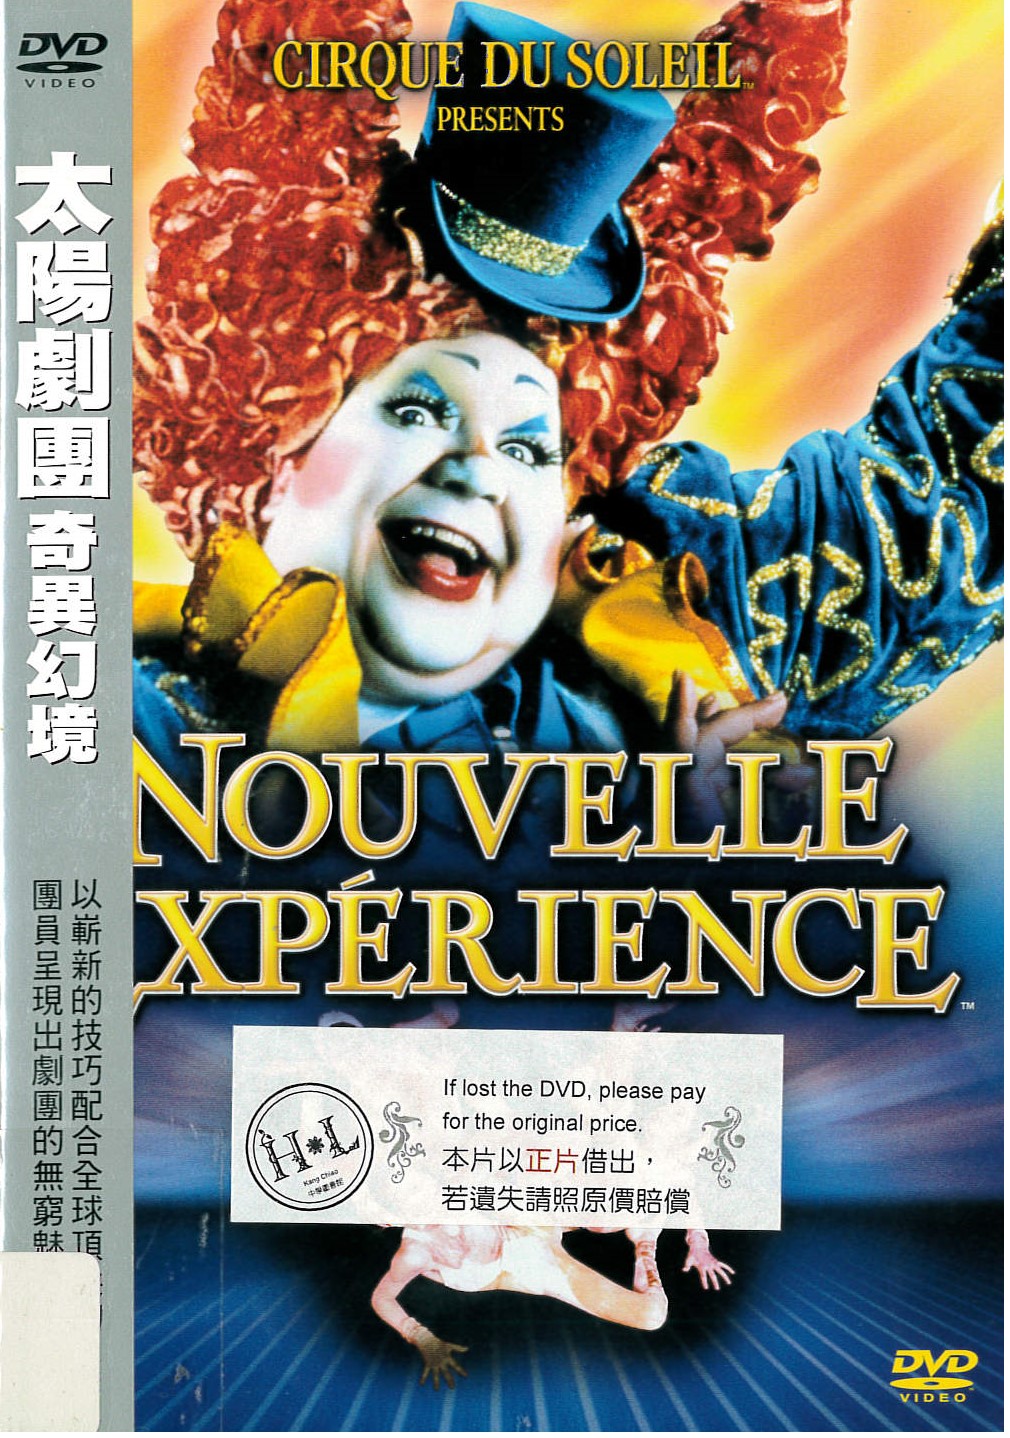 太陽劇團 : Cirque du soleil:nouvelle experience : 奇異幻境